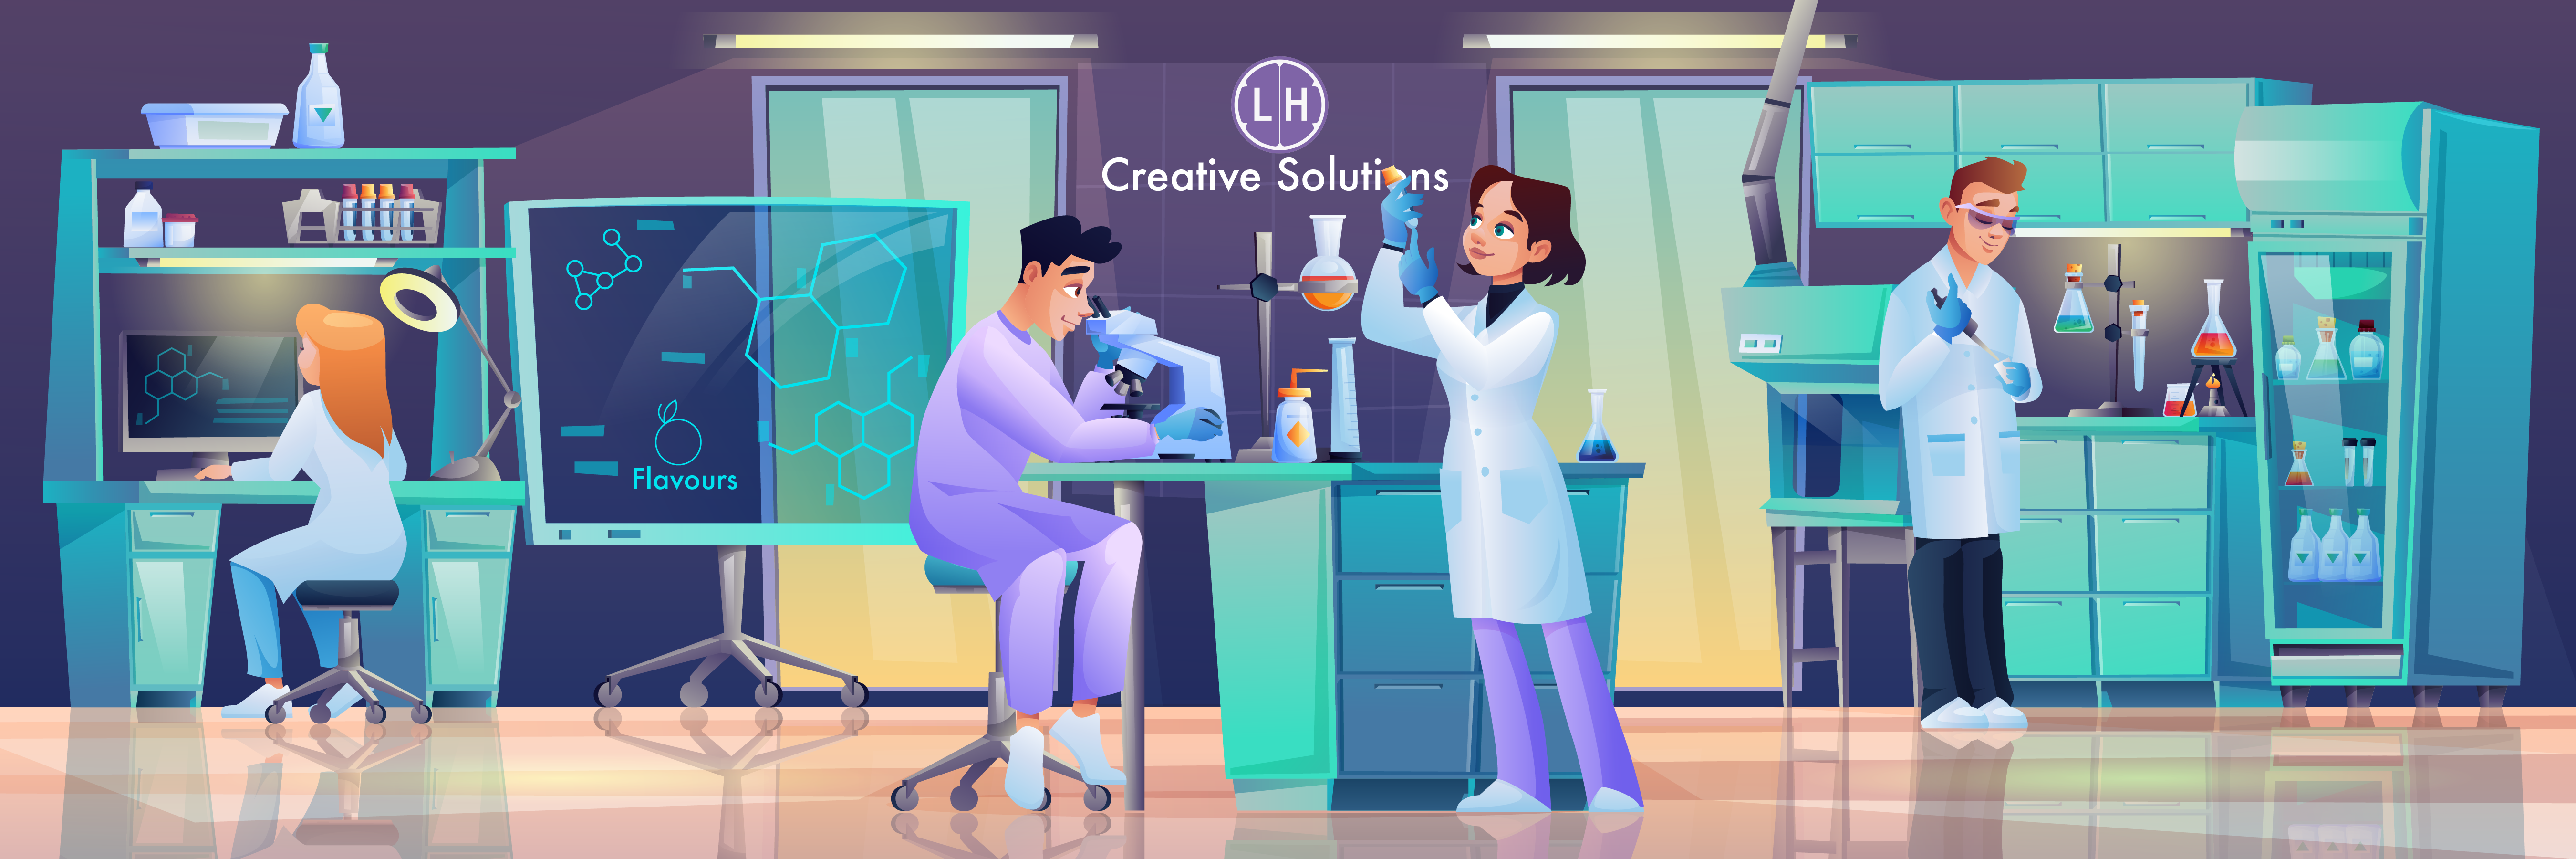 creative solutions lab